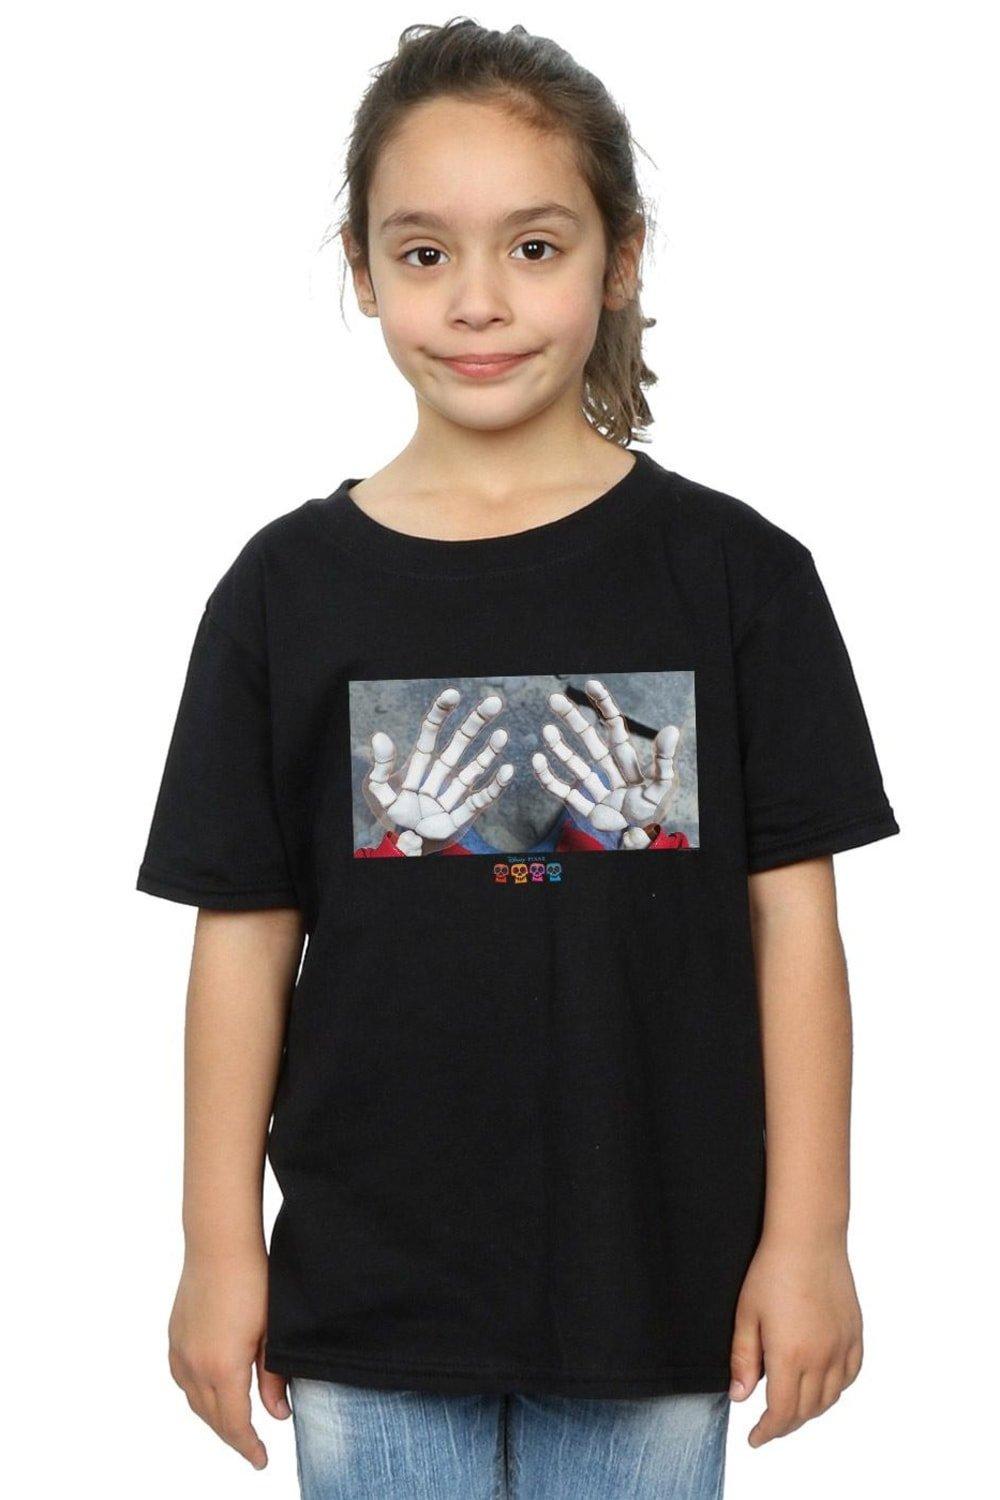 Coco Miguel Skeleton Hands Cotton T-Shirt